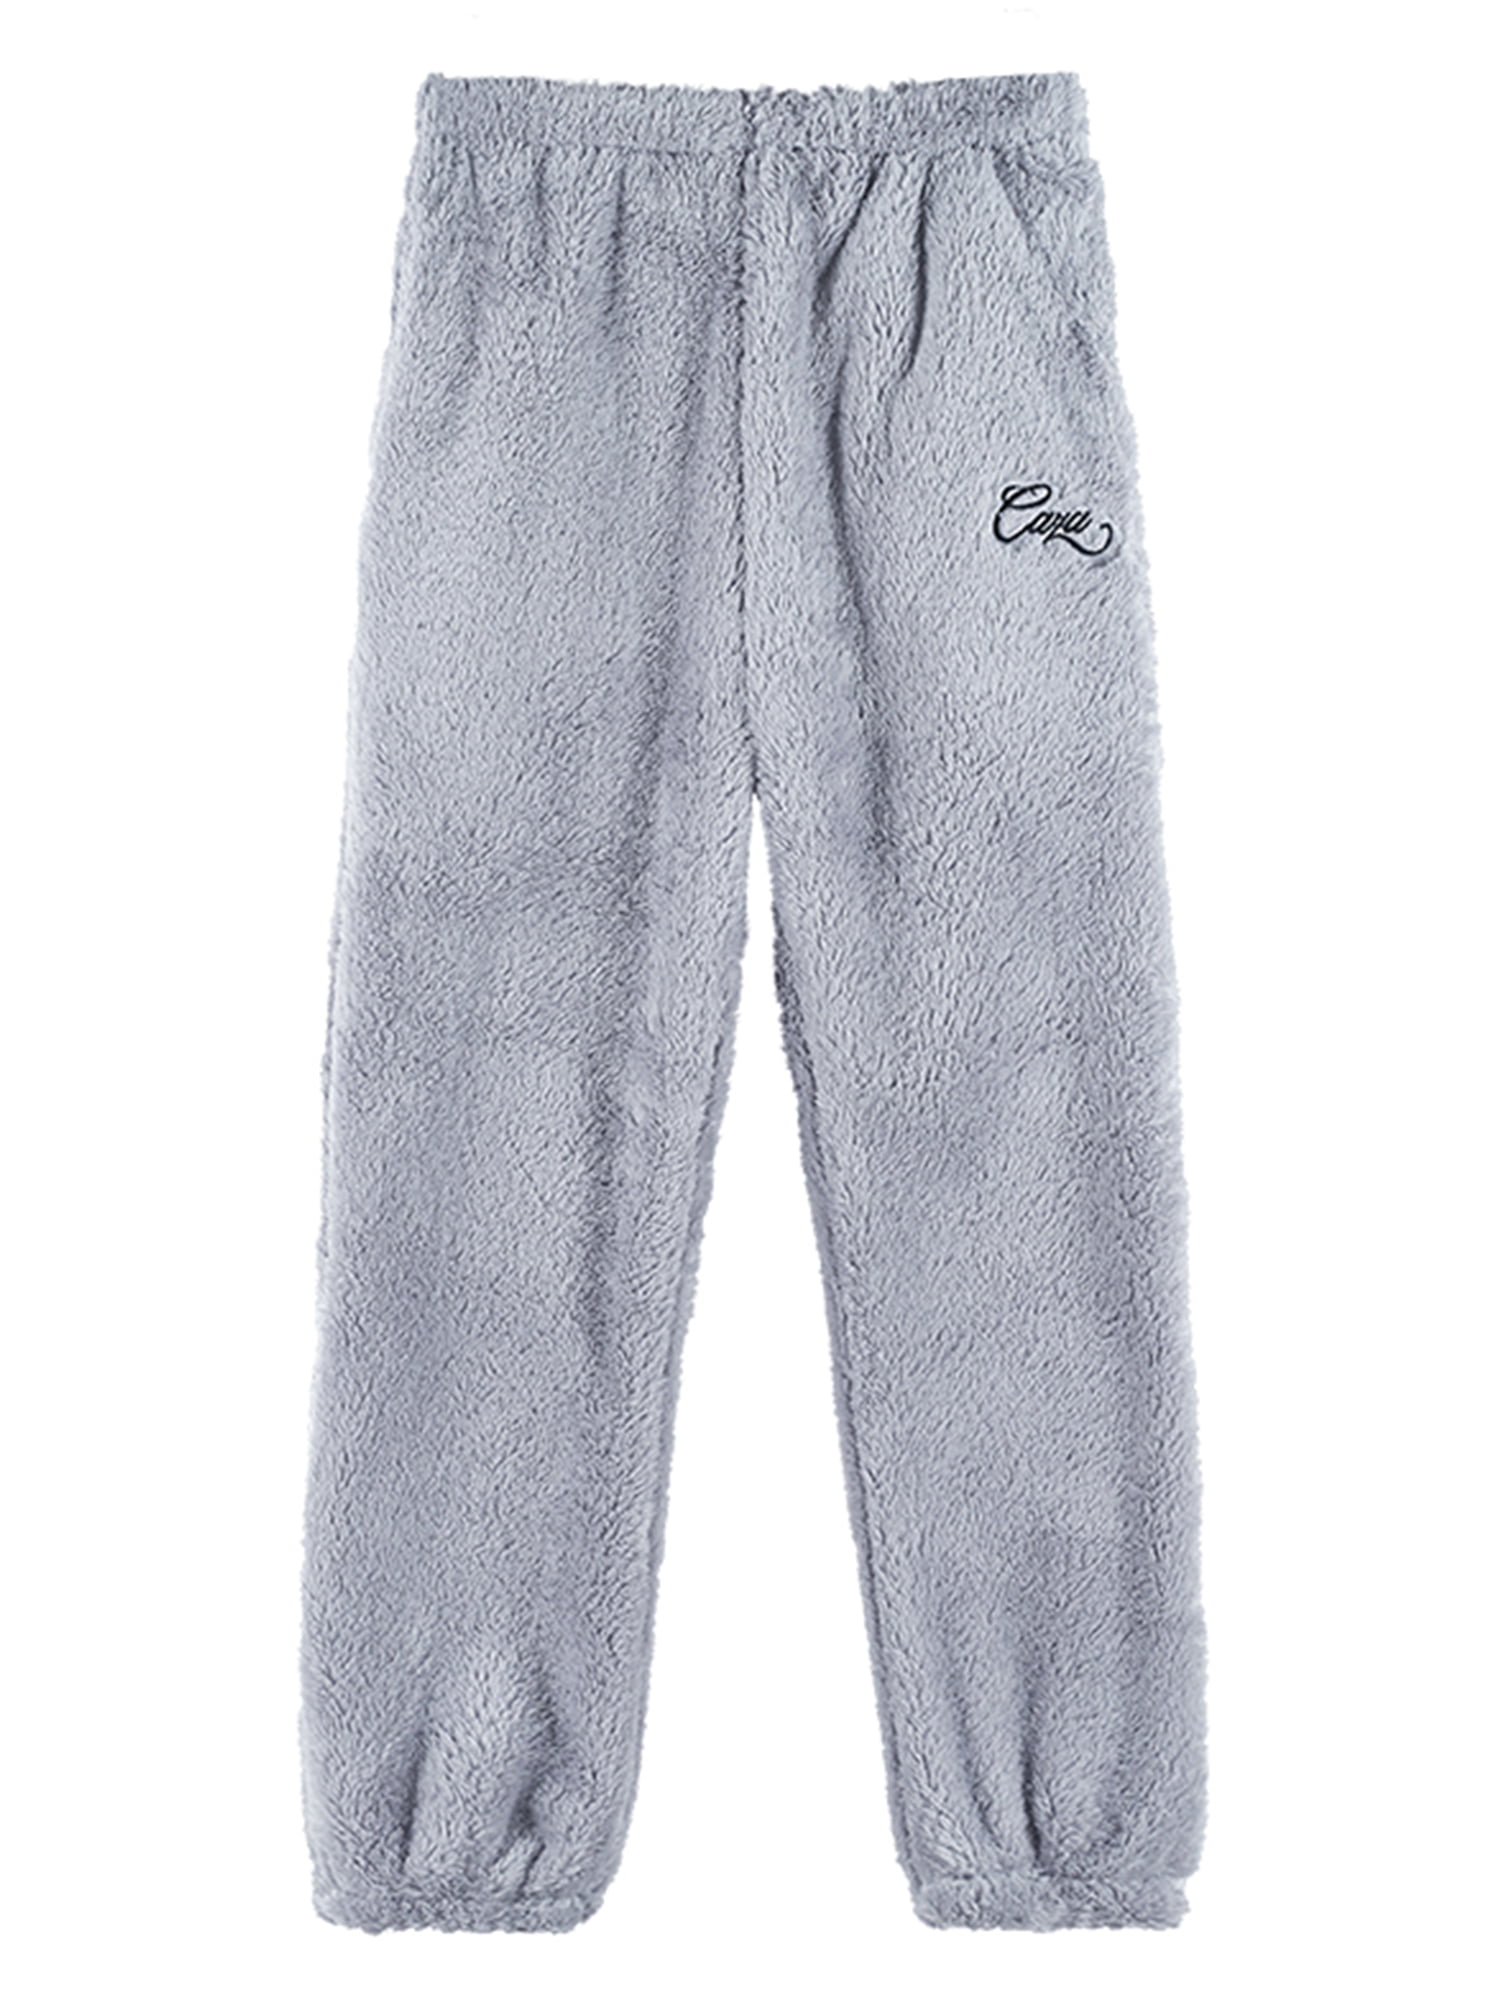 Cindysus Women Sleepwear Fuzzy Fleece Pajama Pants Solid Color Pj ...